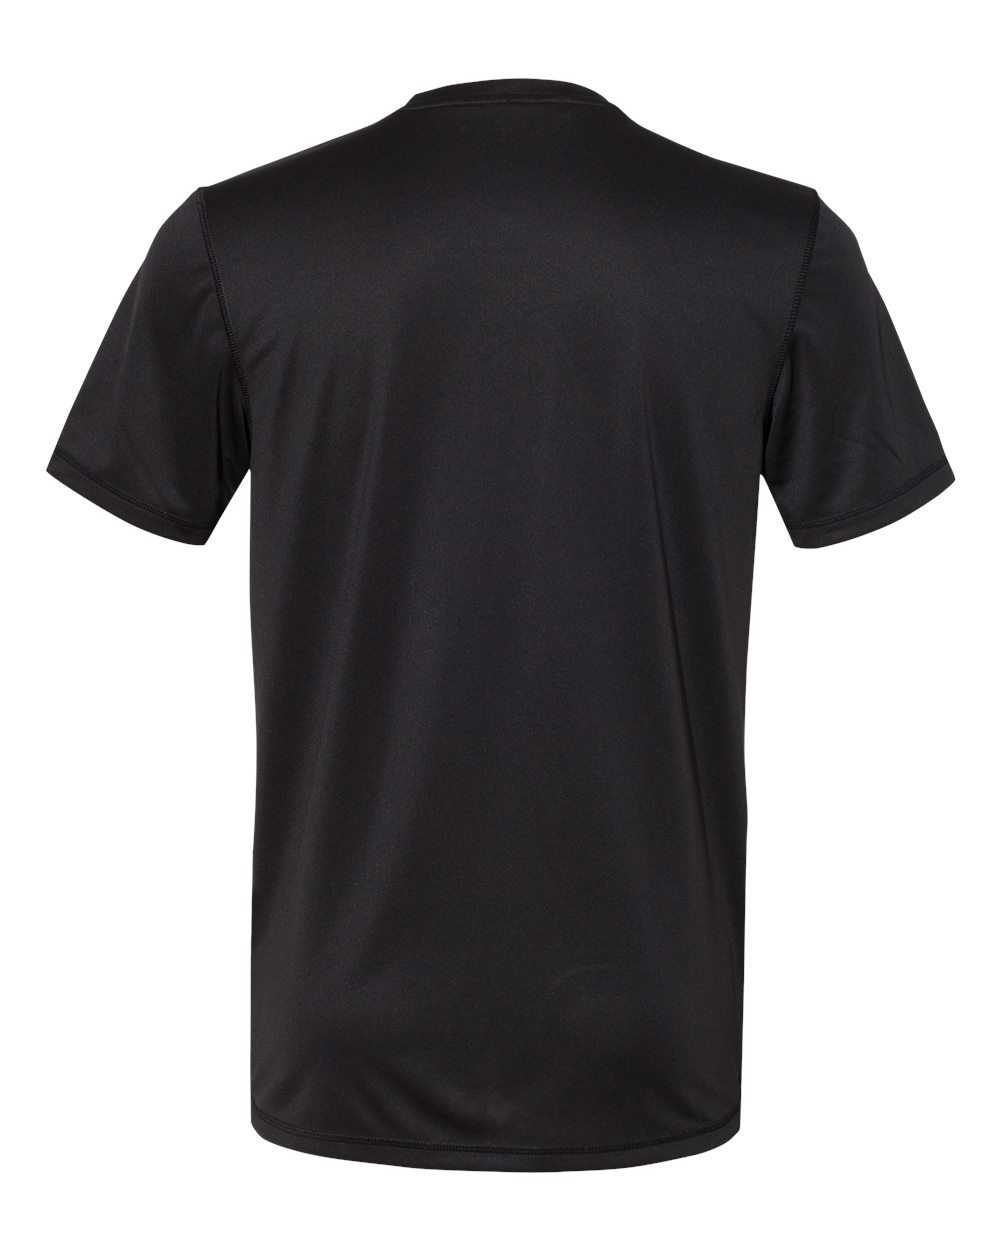 Adidas A376 Sport T-Shirt - Black - HIT a Double